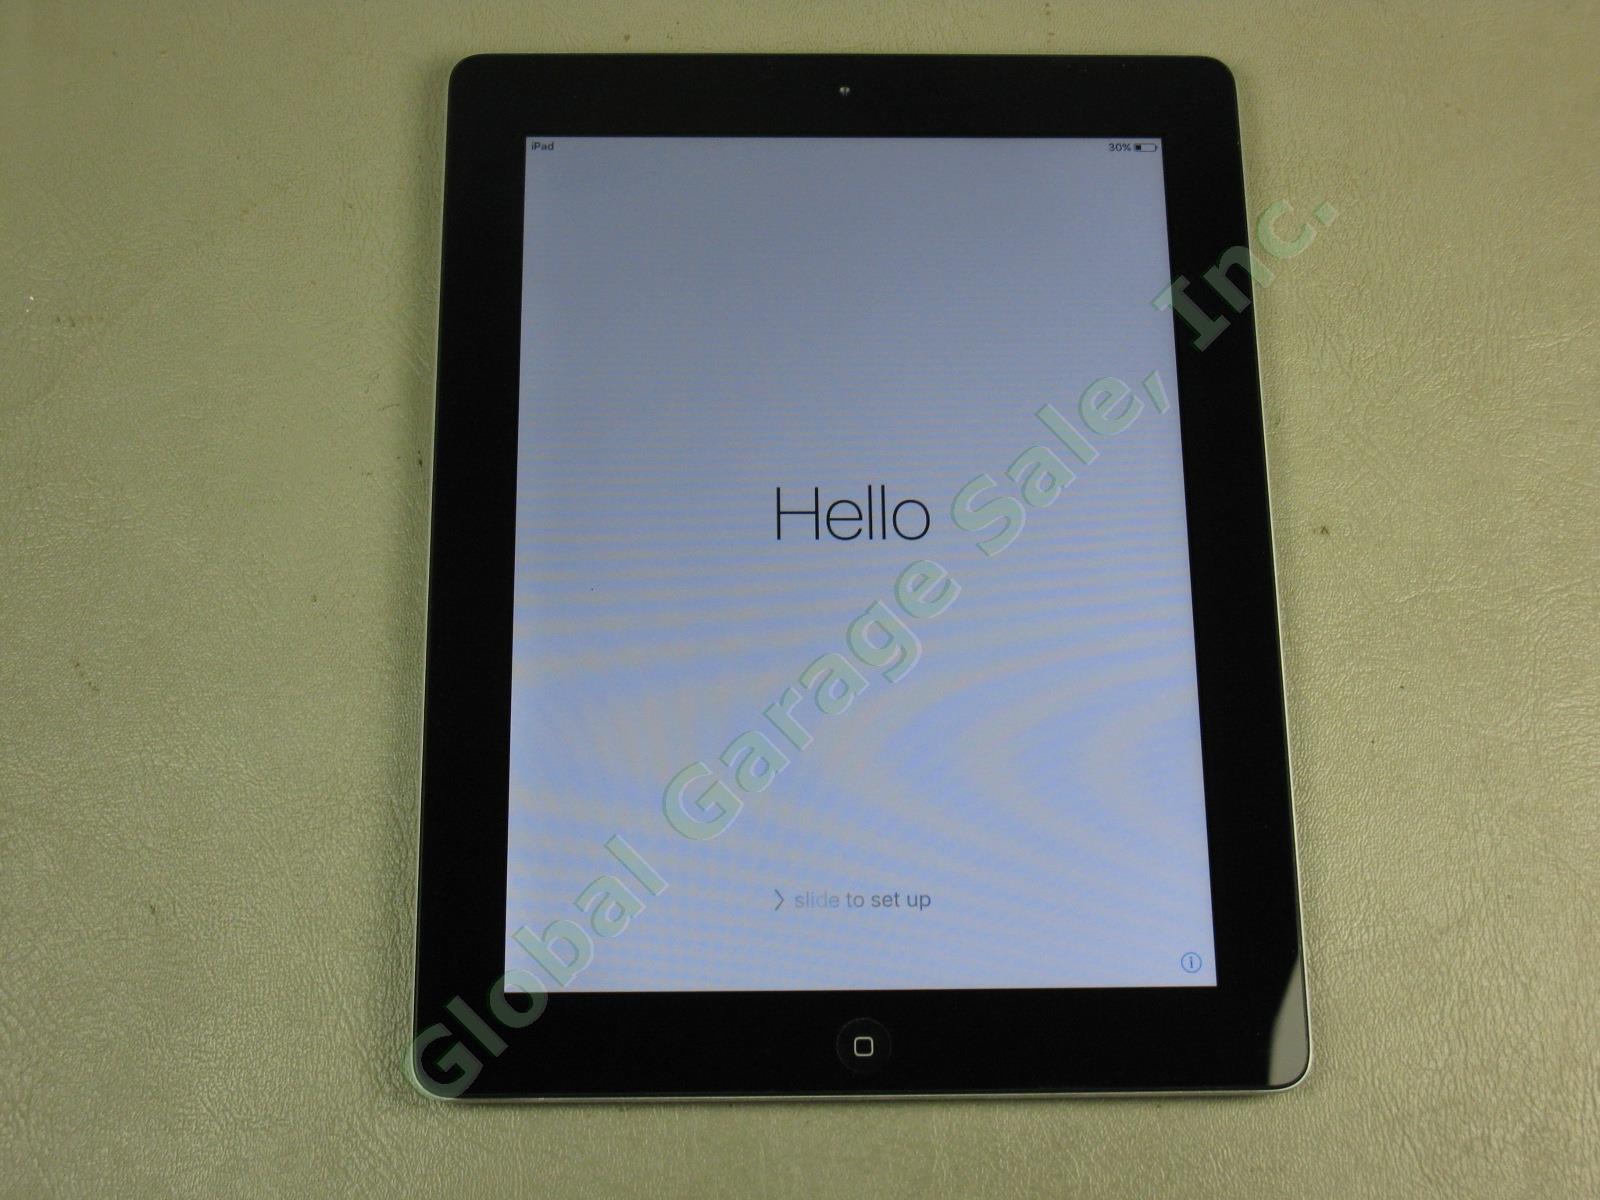 Apple iPad 2 Wifi 16GB Black Tablet Works Great One Owner MC770LL/A A1395 NR!